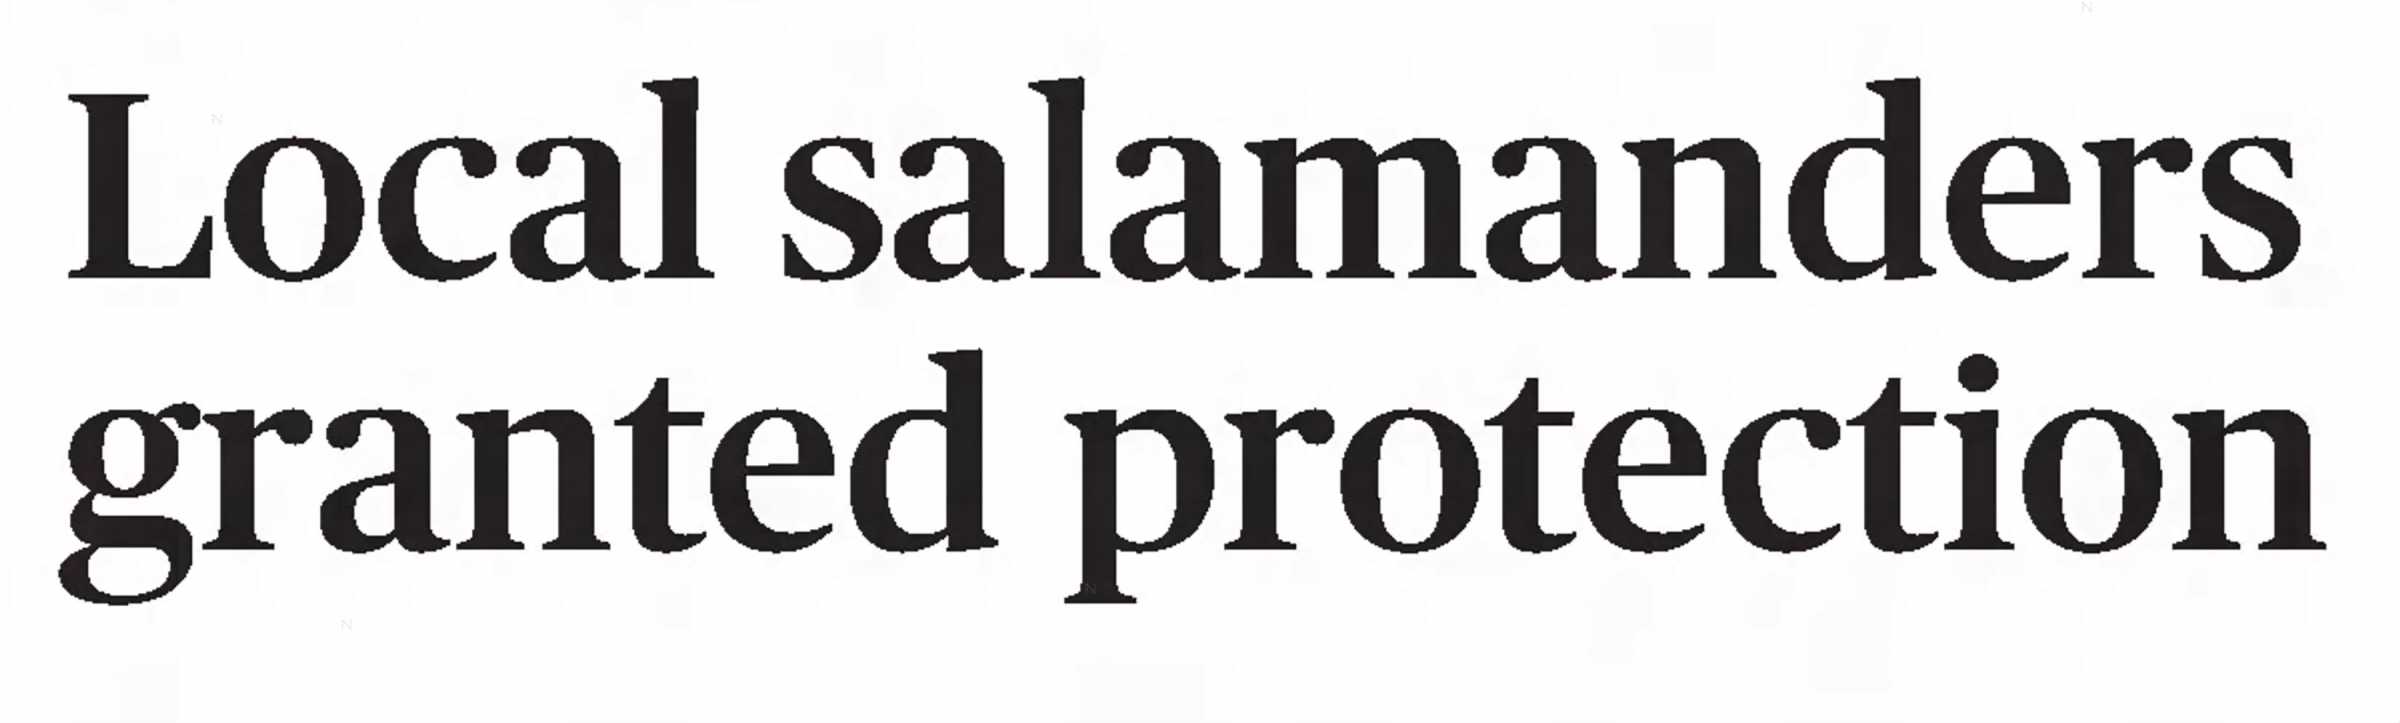 Local salamanders granted protection